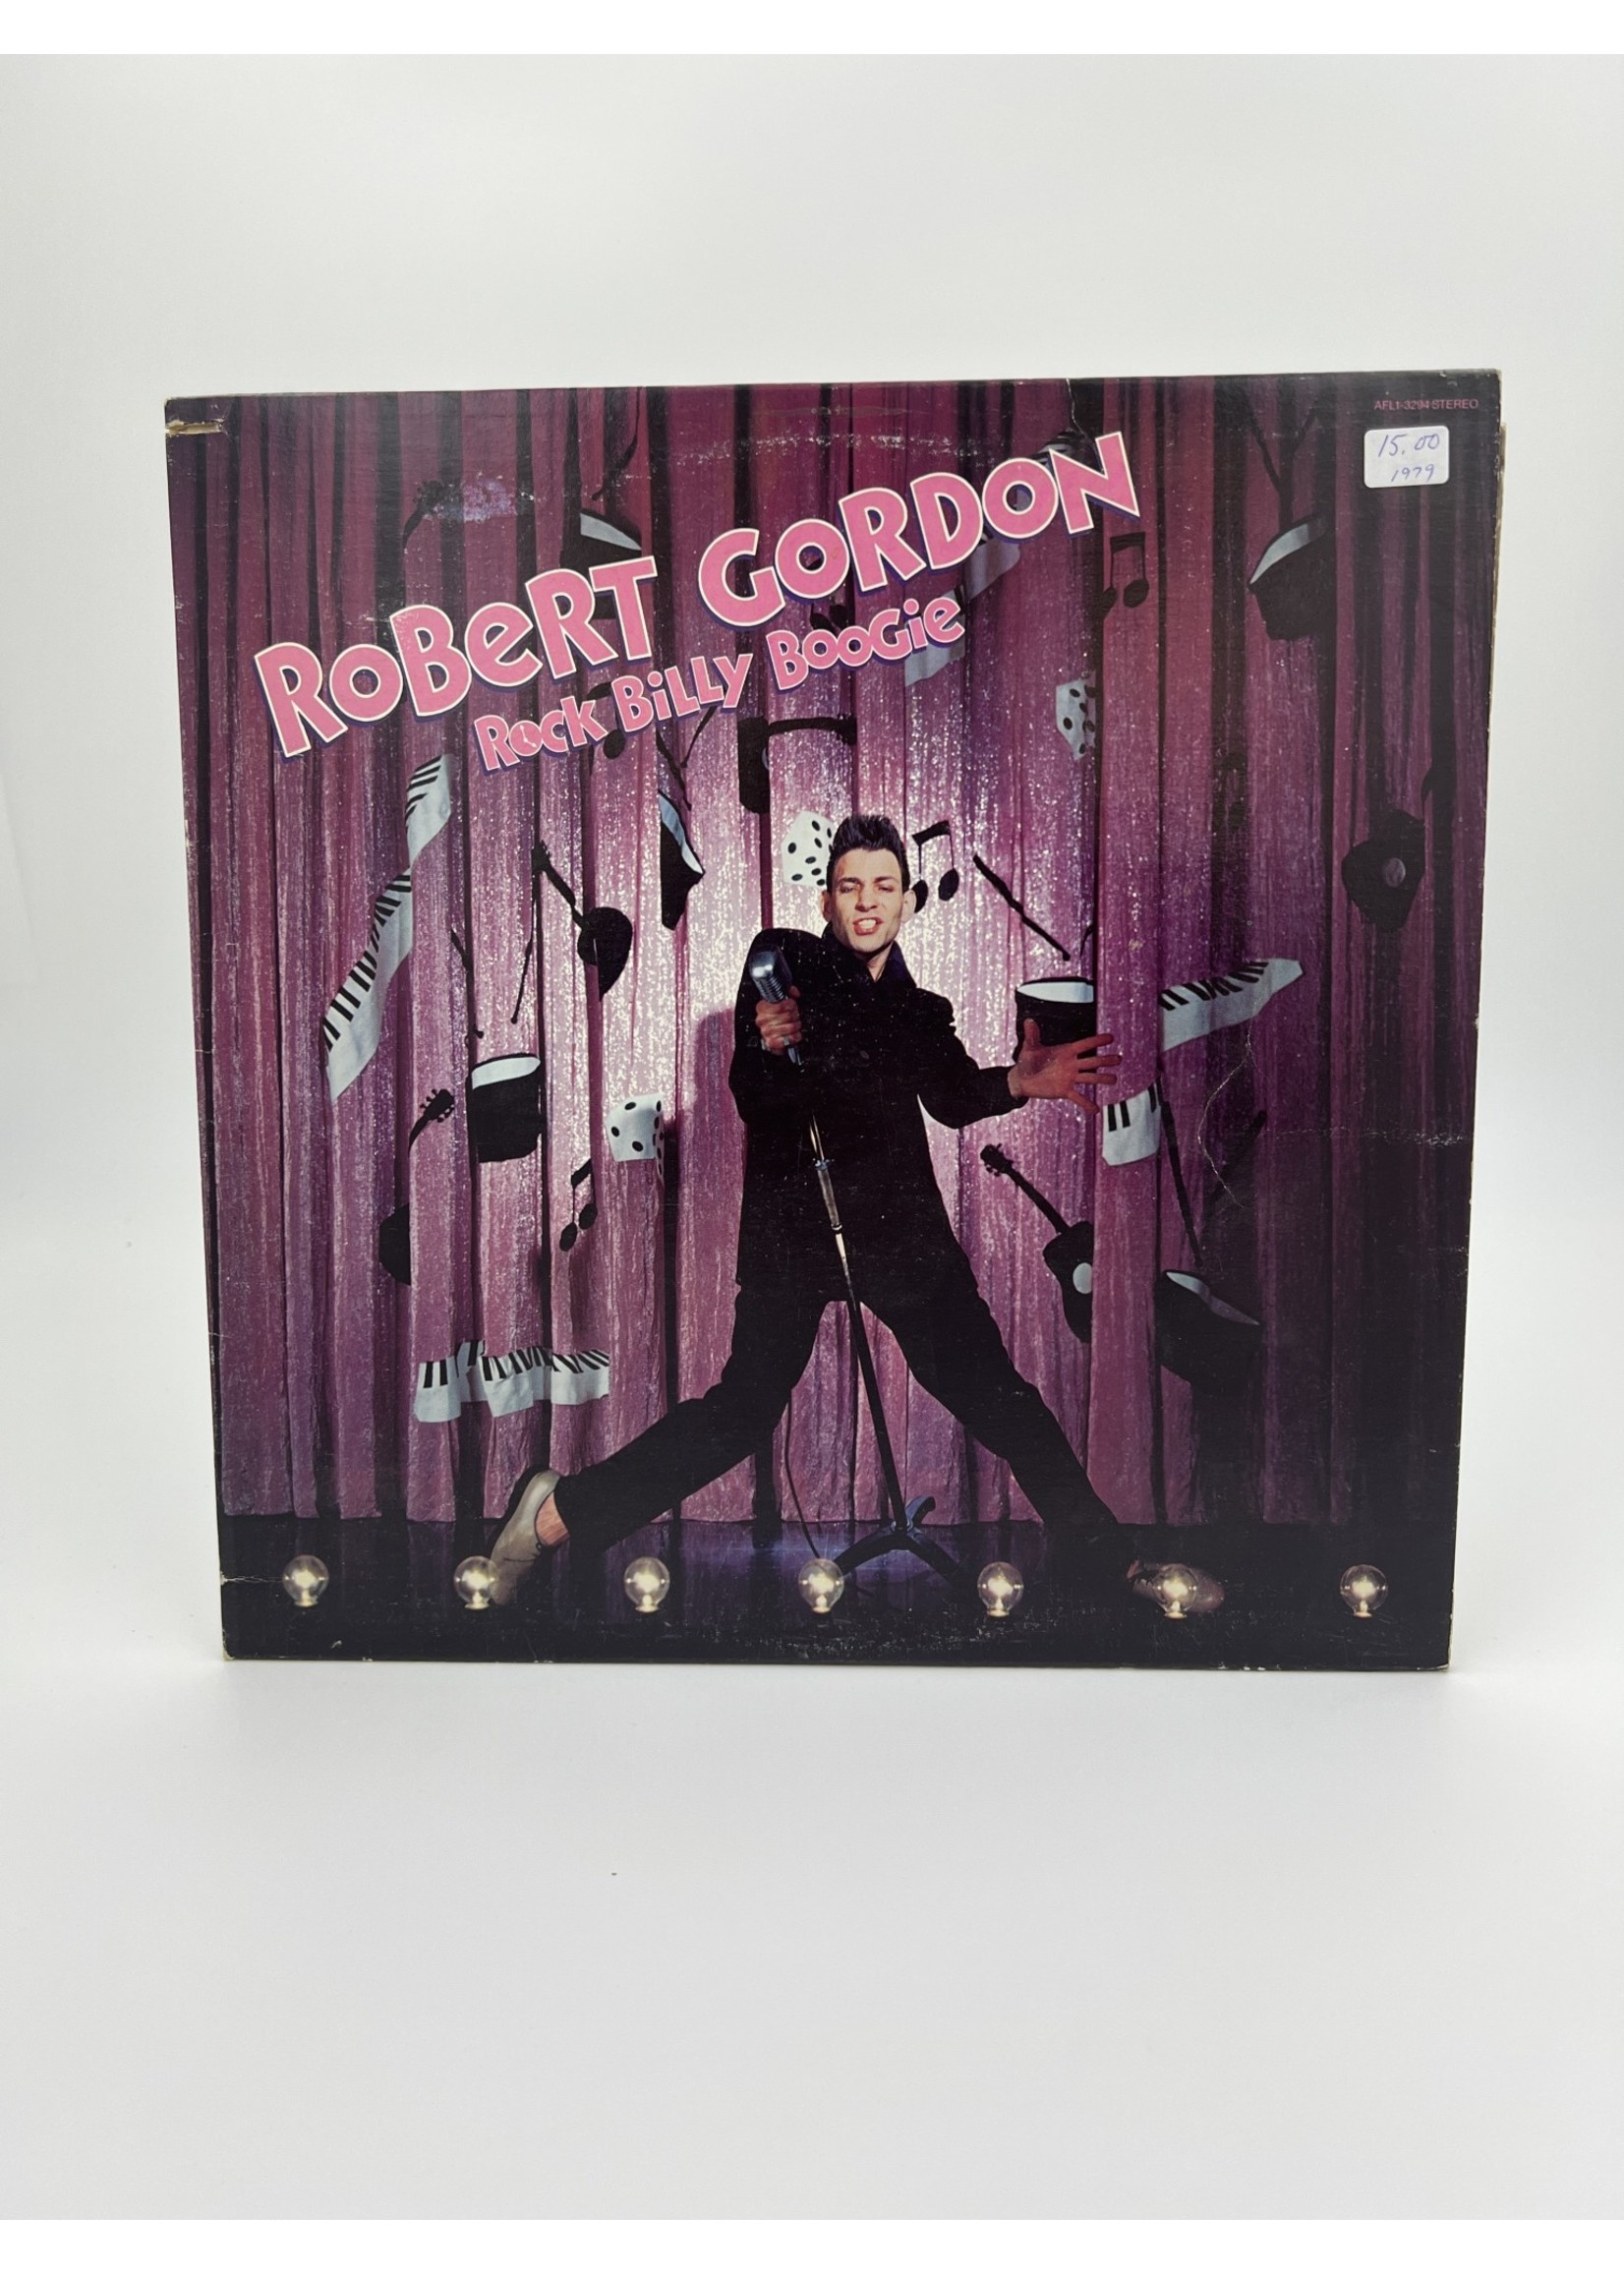 LP Robert Gordon Rock Billy Boogie Lp Record